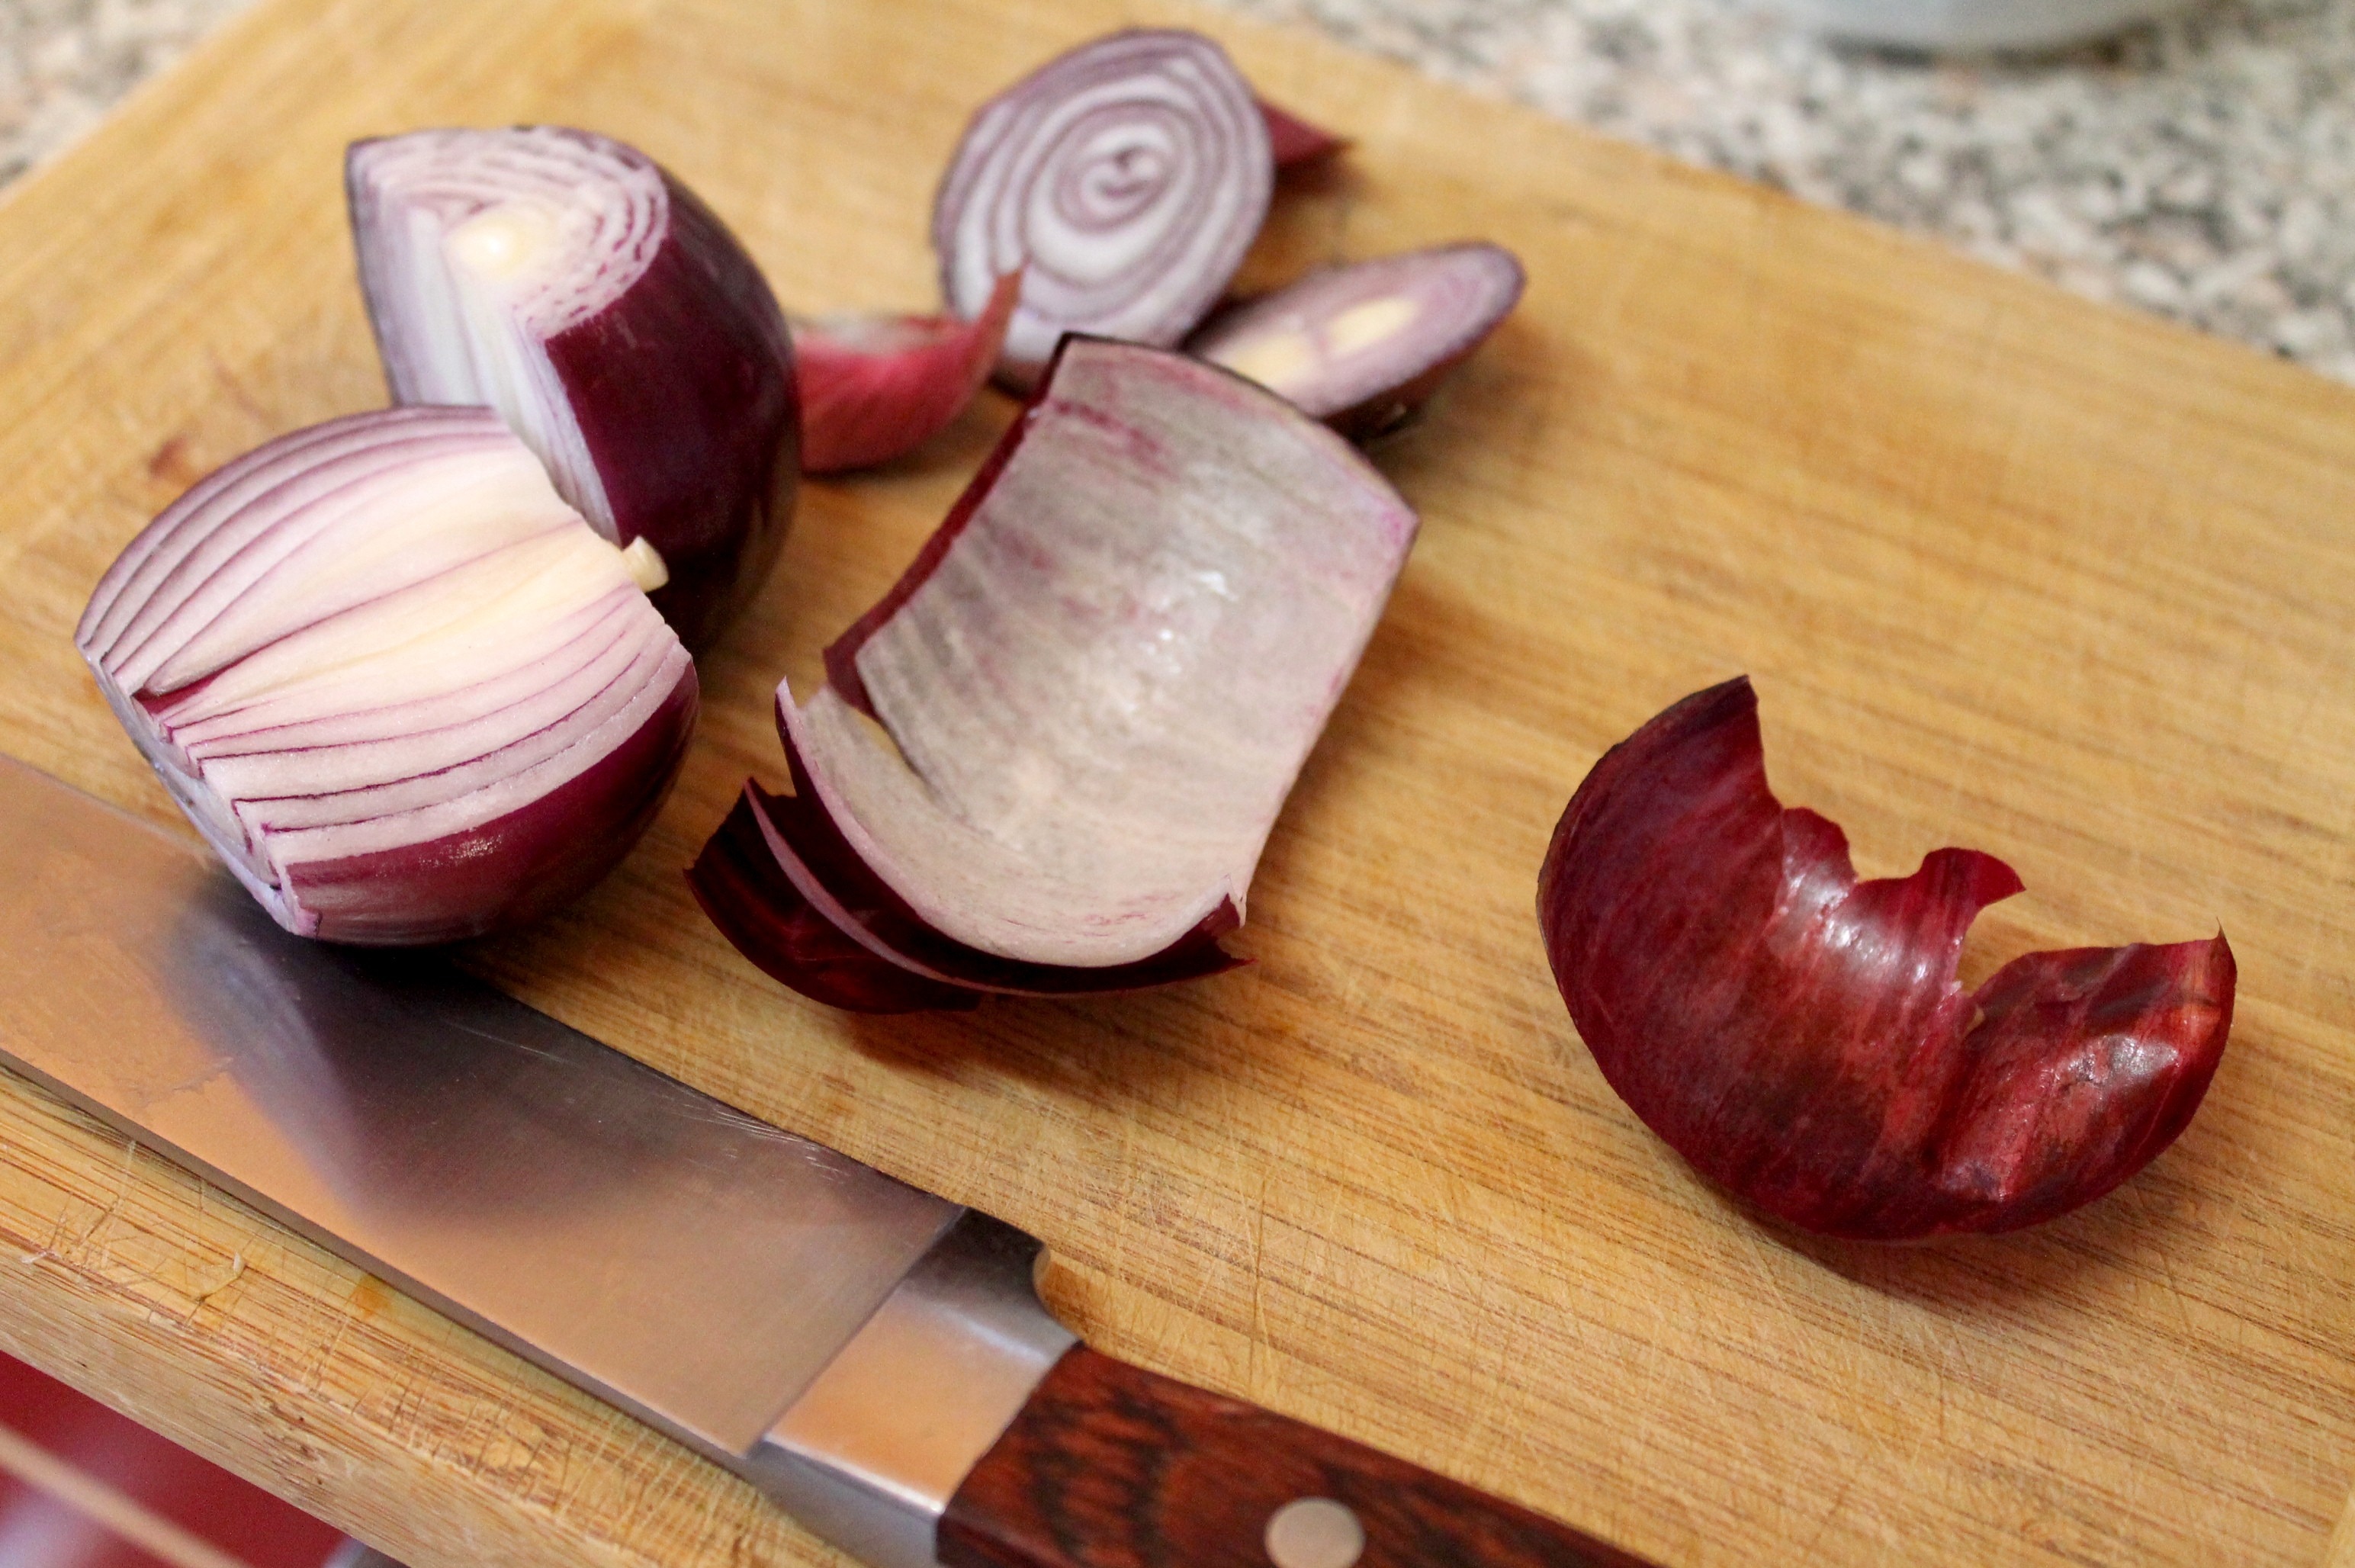 Onions, Board, Knife, Kitchen, Cut, cutting board, food and drink